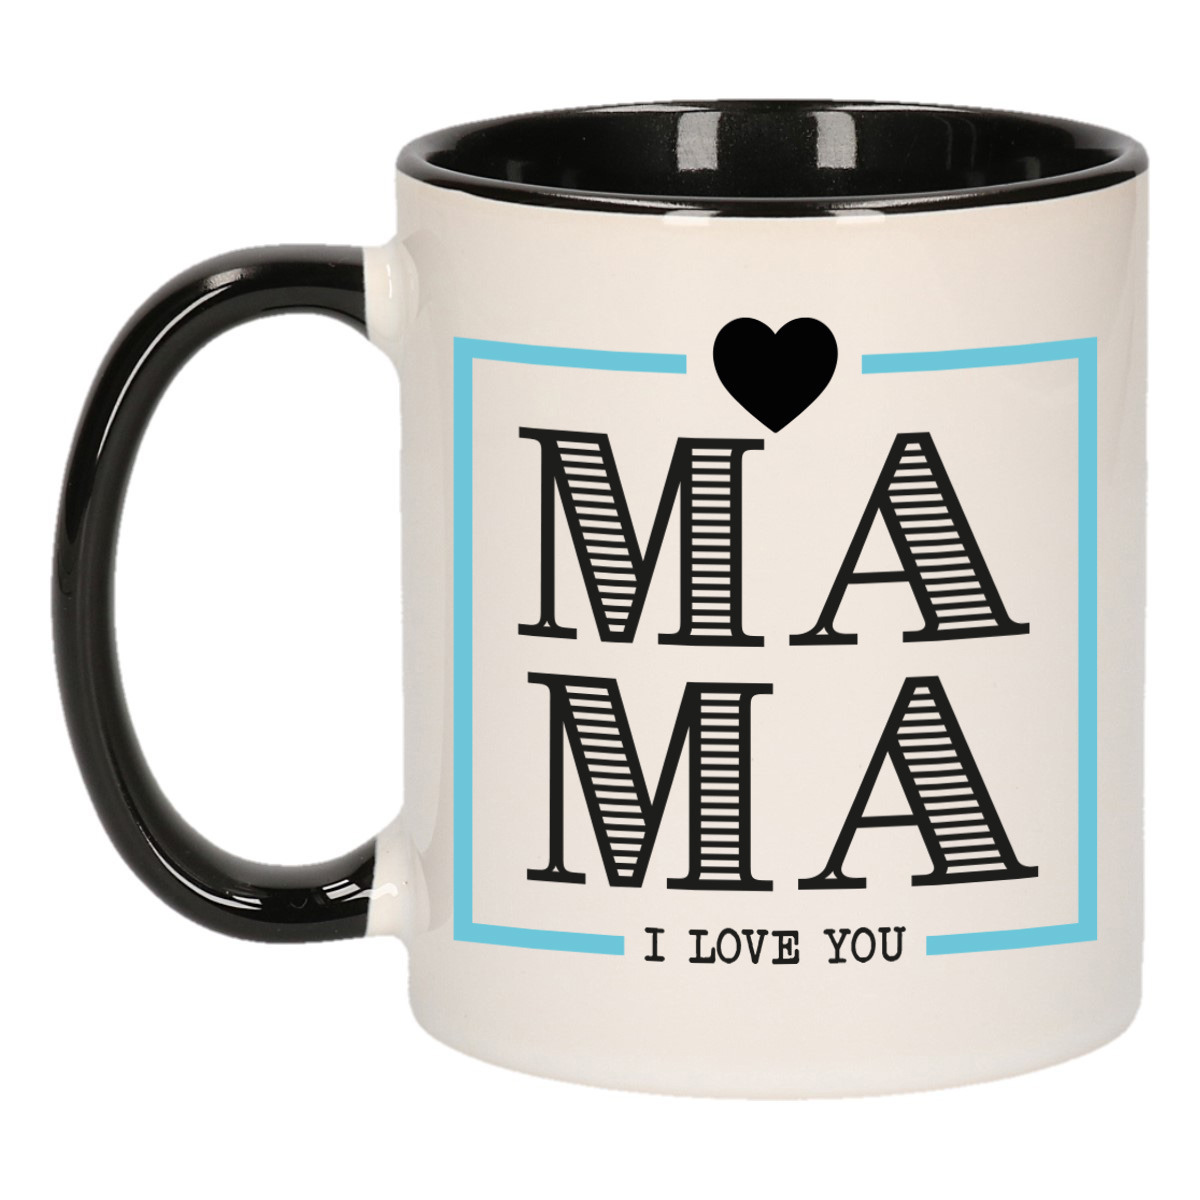 Cadeau koffie/thee mok voor mama - zwart/blauw - ik hou van jou - keramiek - Moederdag -